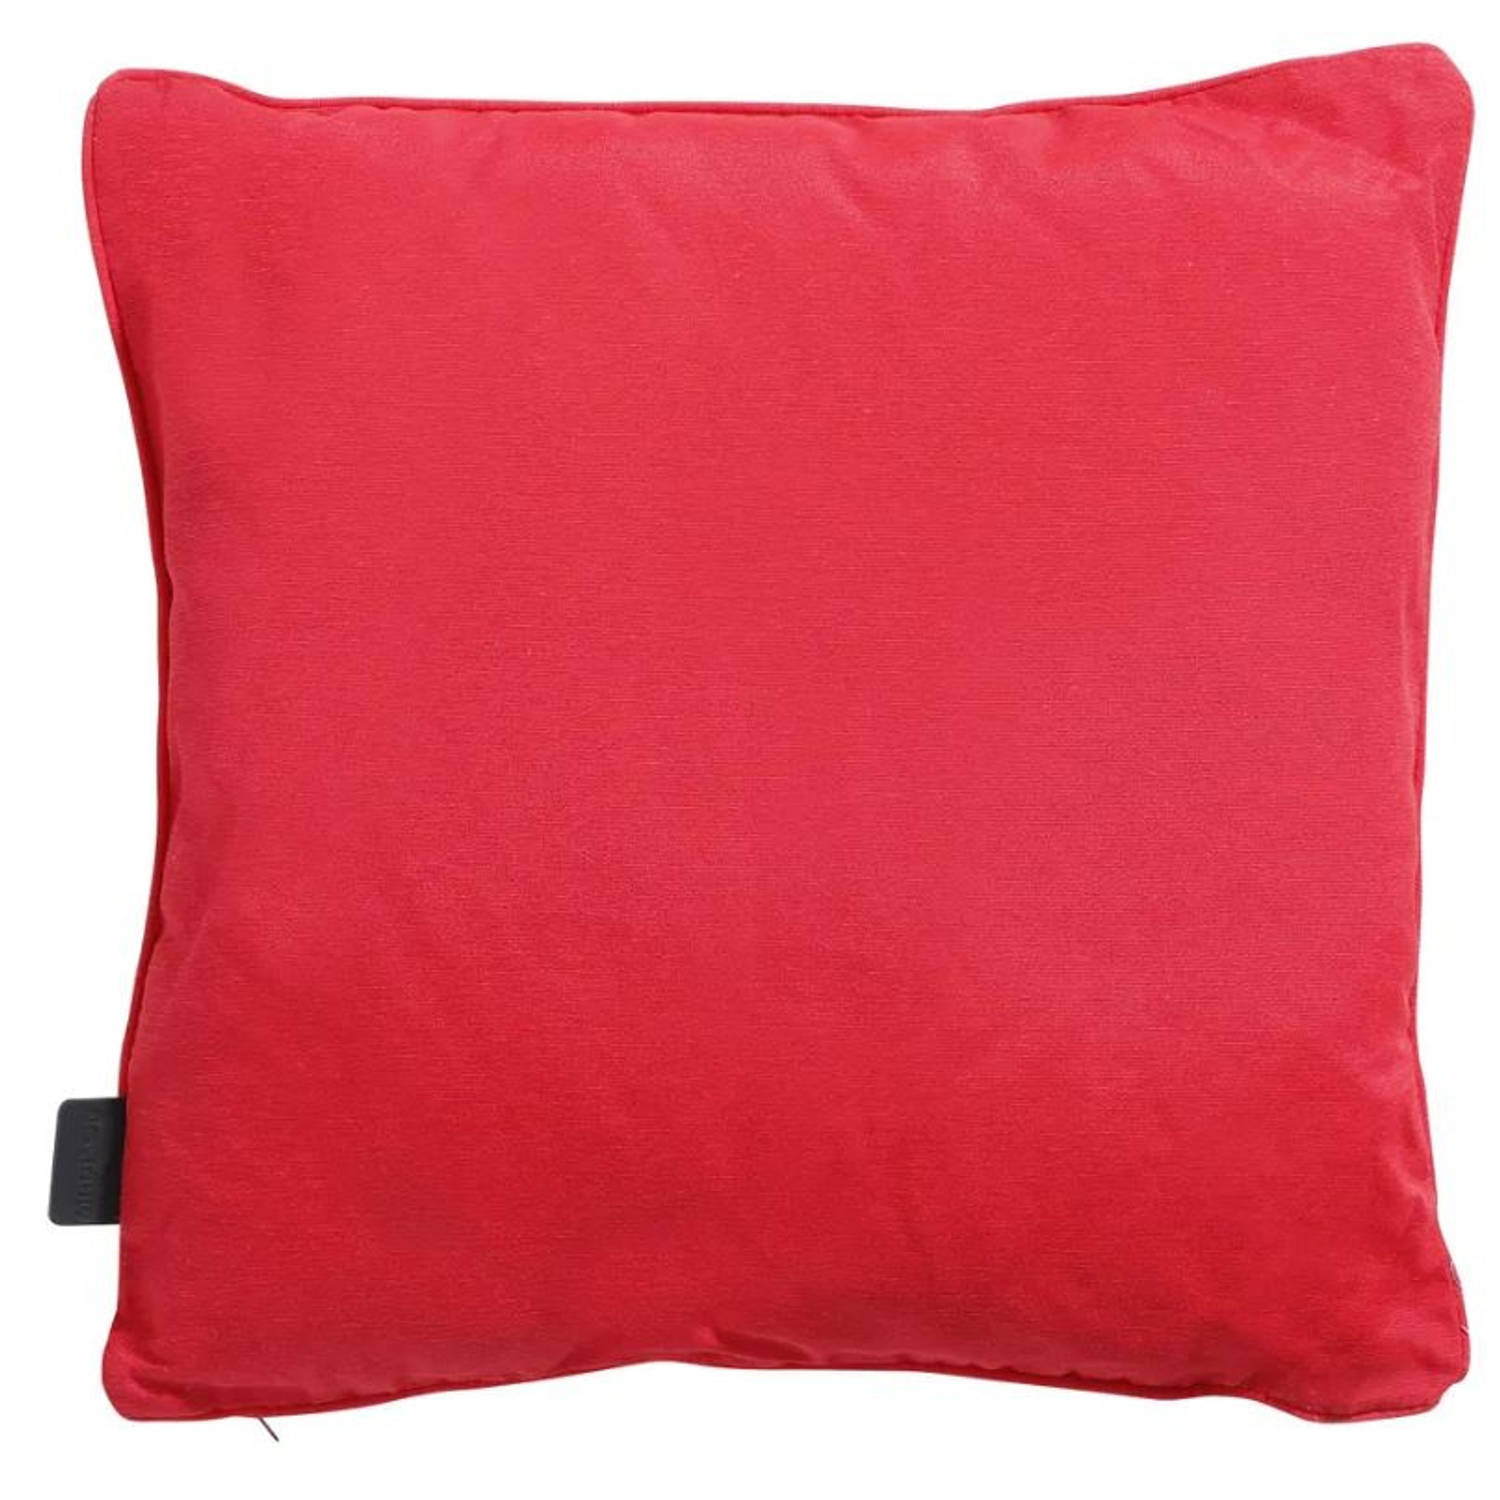 Madison Sierkussen Pillow 60x60cm Laagste prijsgarantie!